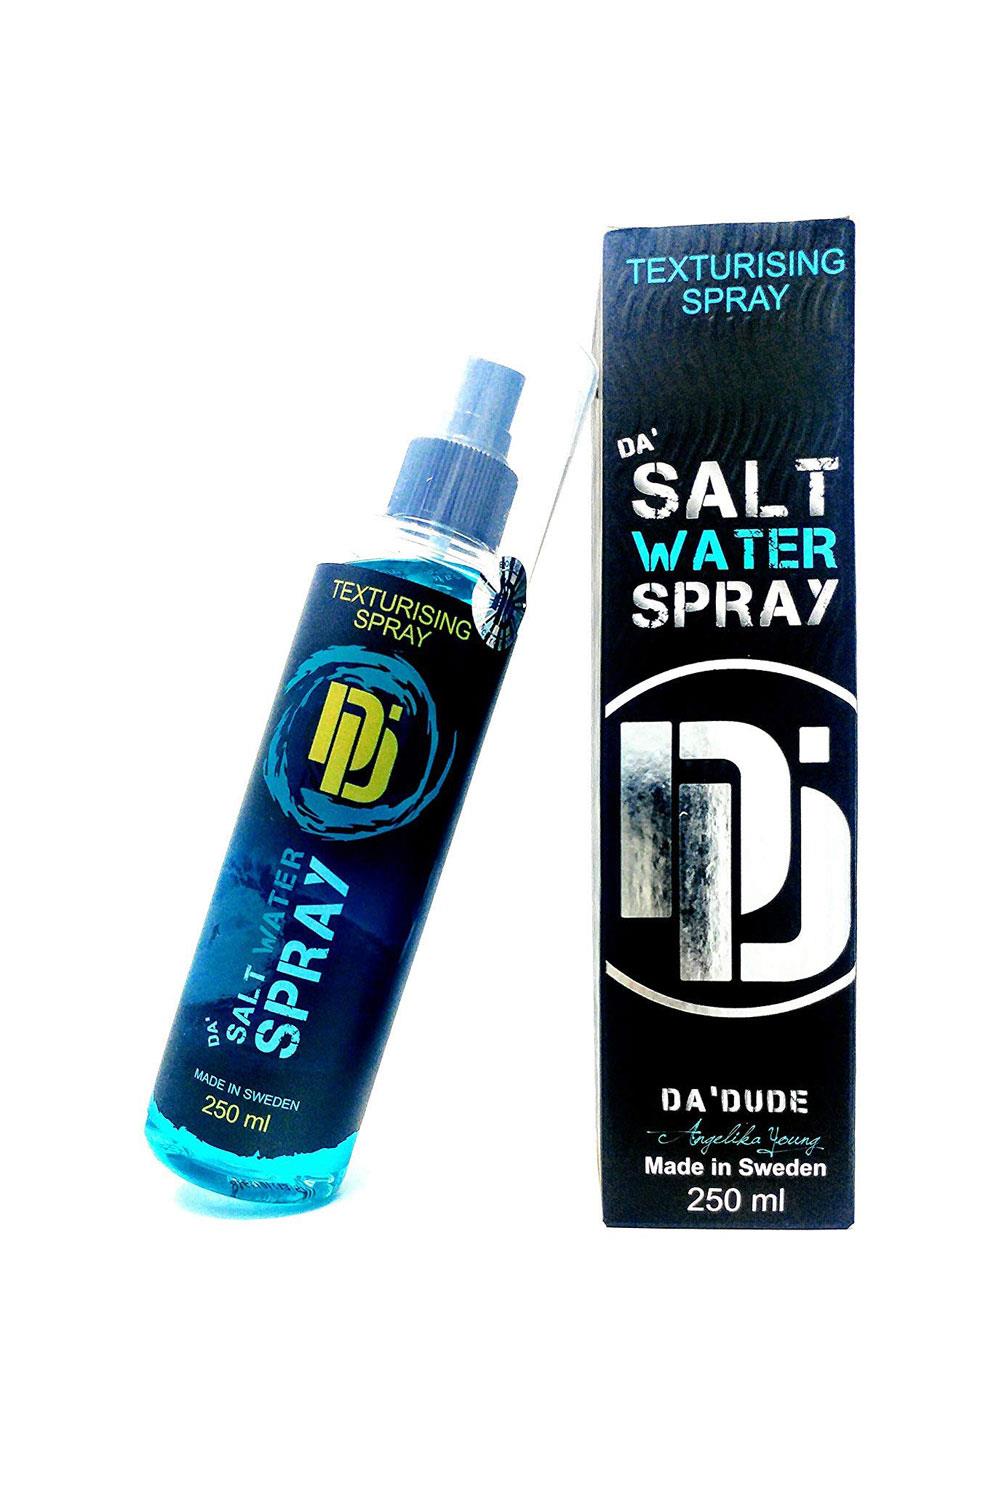 spray sal Da' Salt Water Spray de Da'Dude, 13,95€